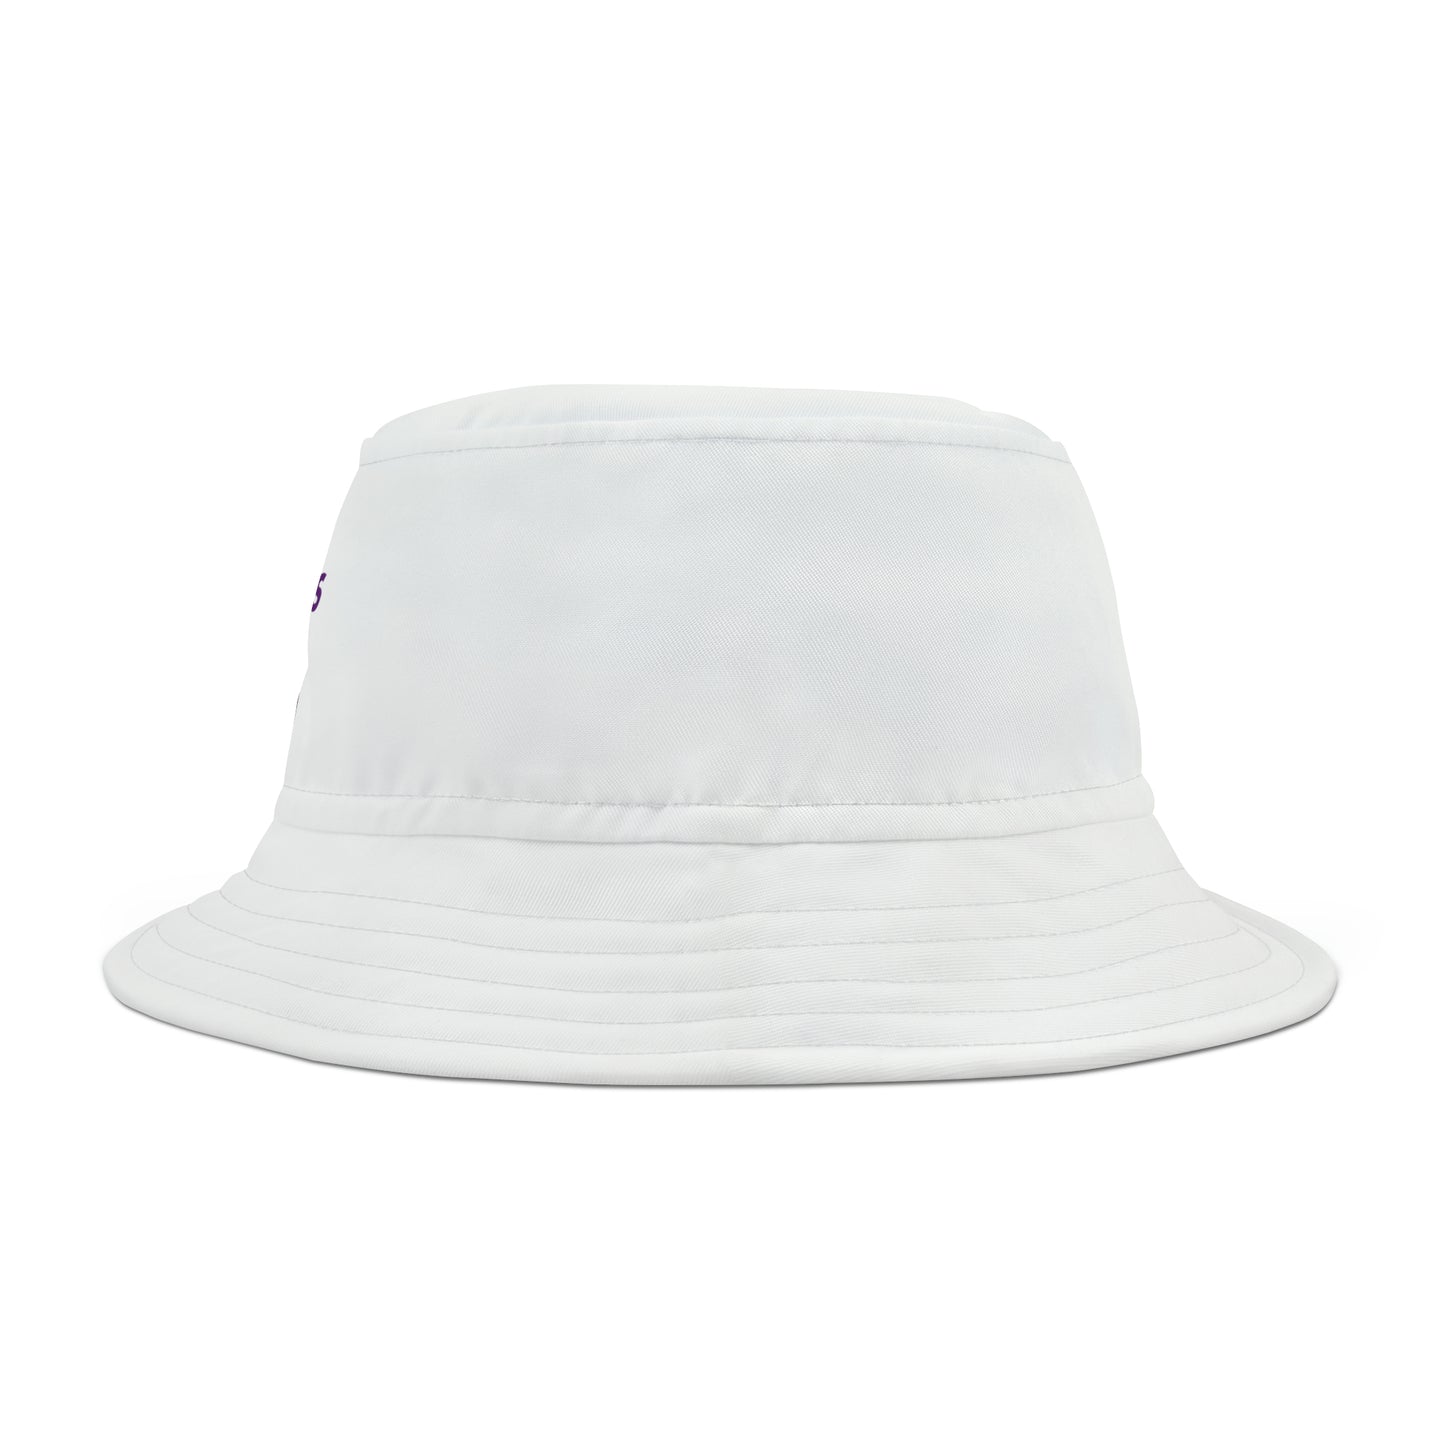 The Royals of Malibu Bucket Hat